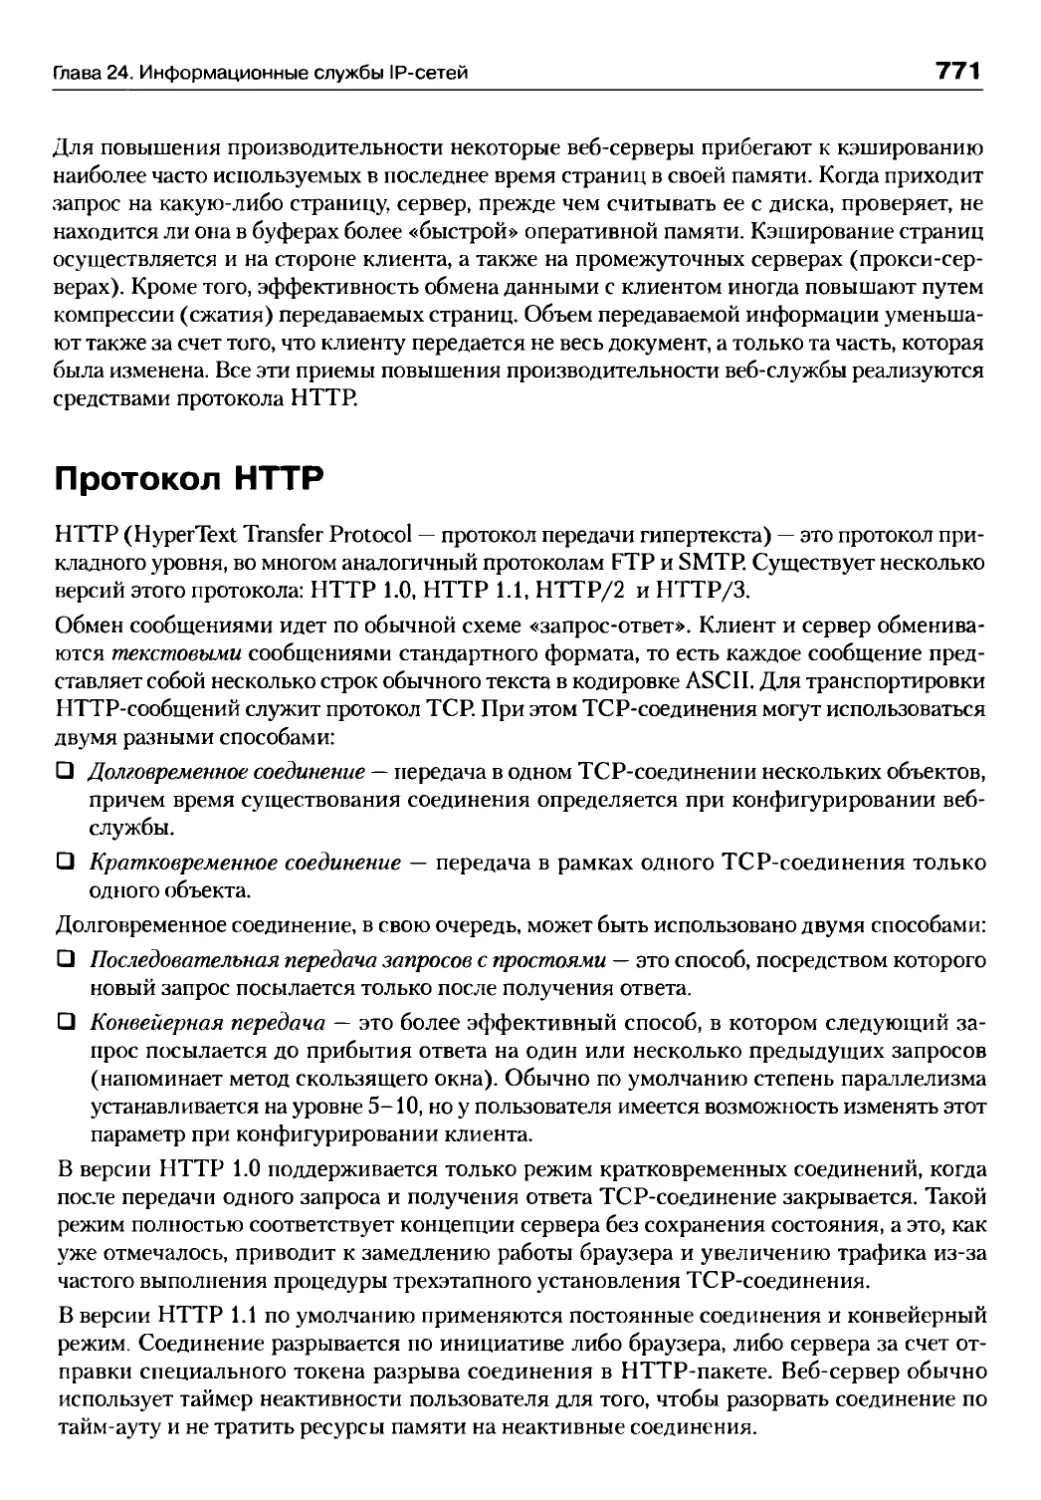 Протокол HTTP